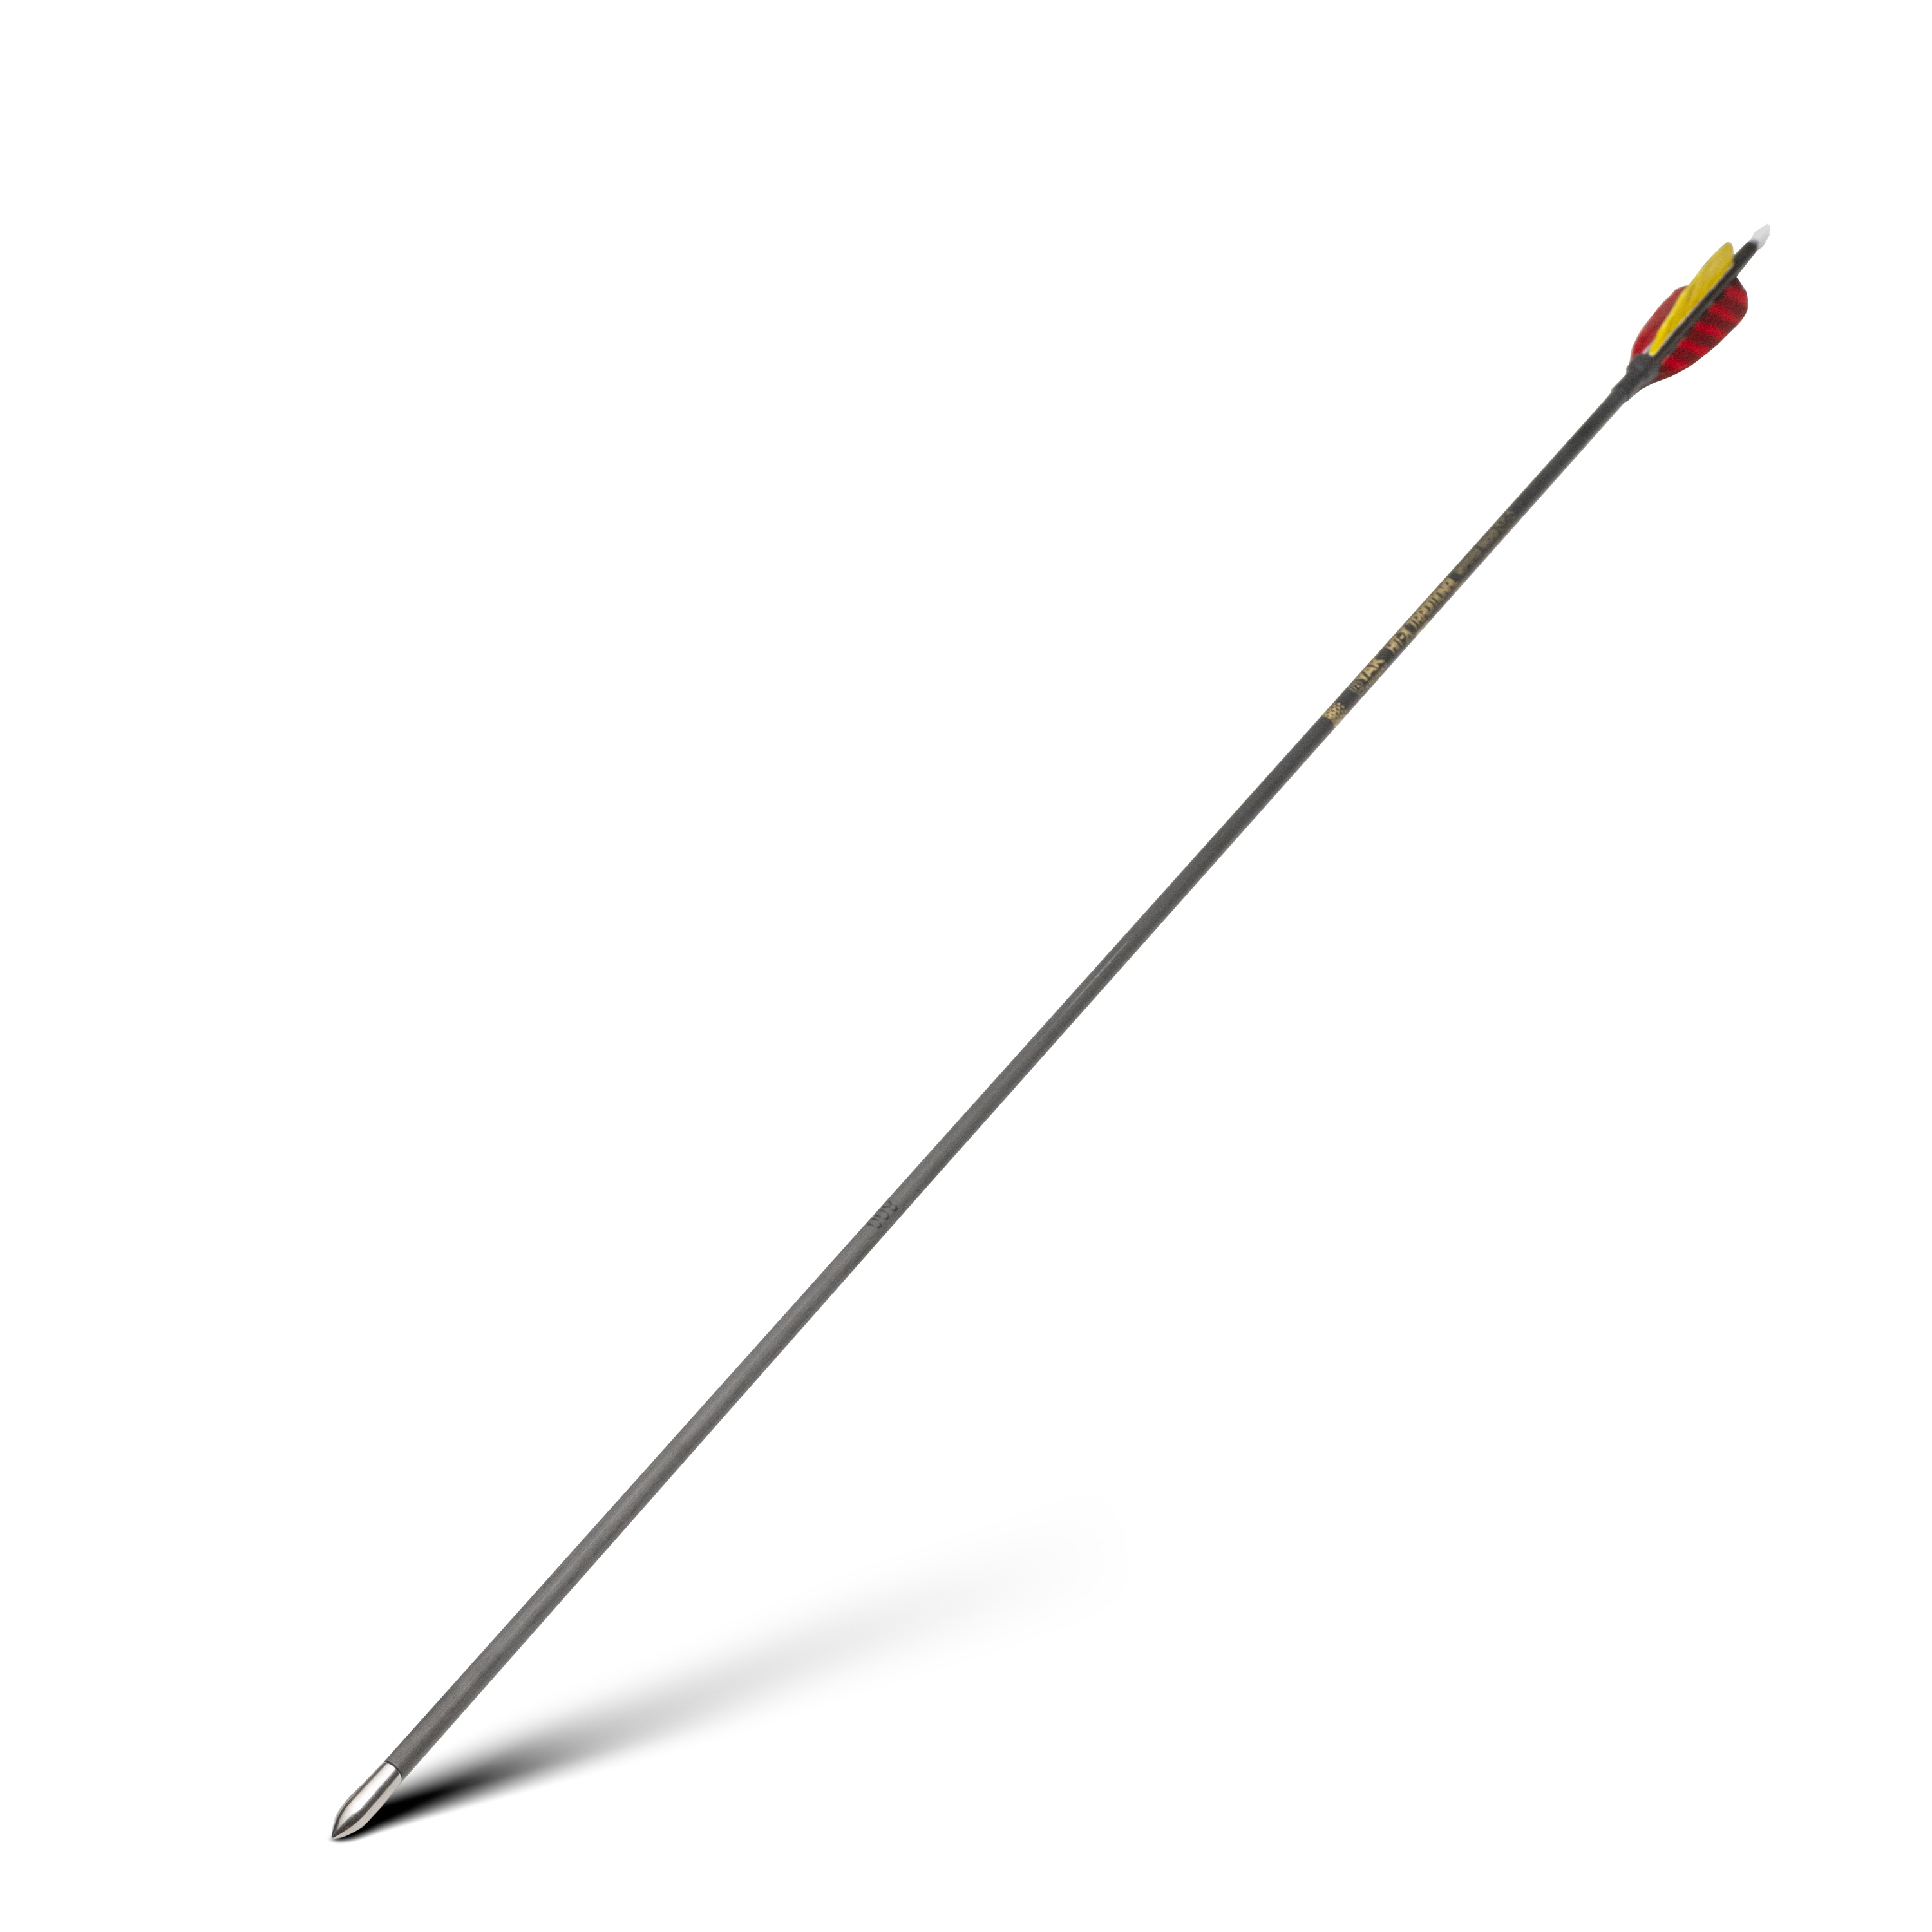  YAK Archery Hit X Traditionell Carbonpfeil  